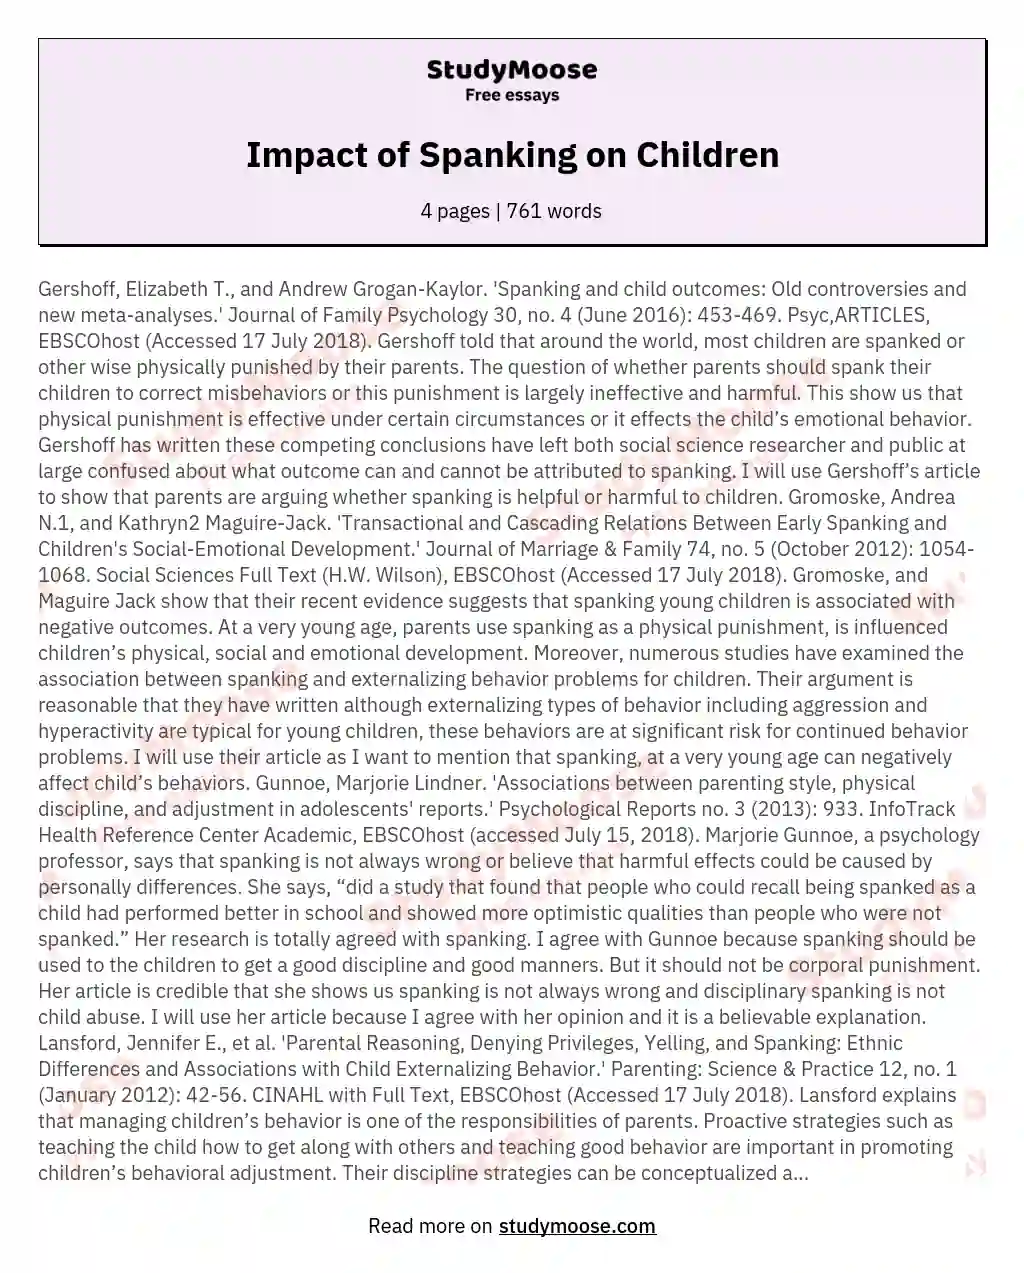 Impact of Spanking on Children essay